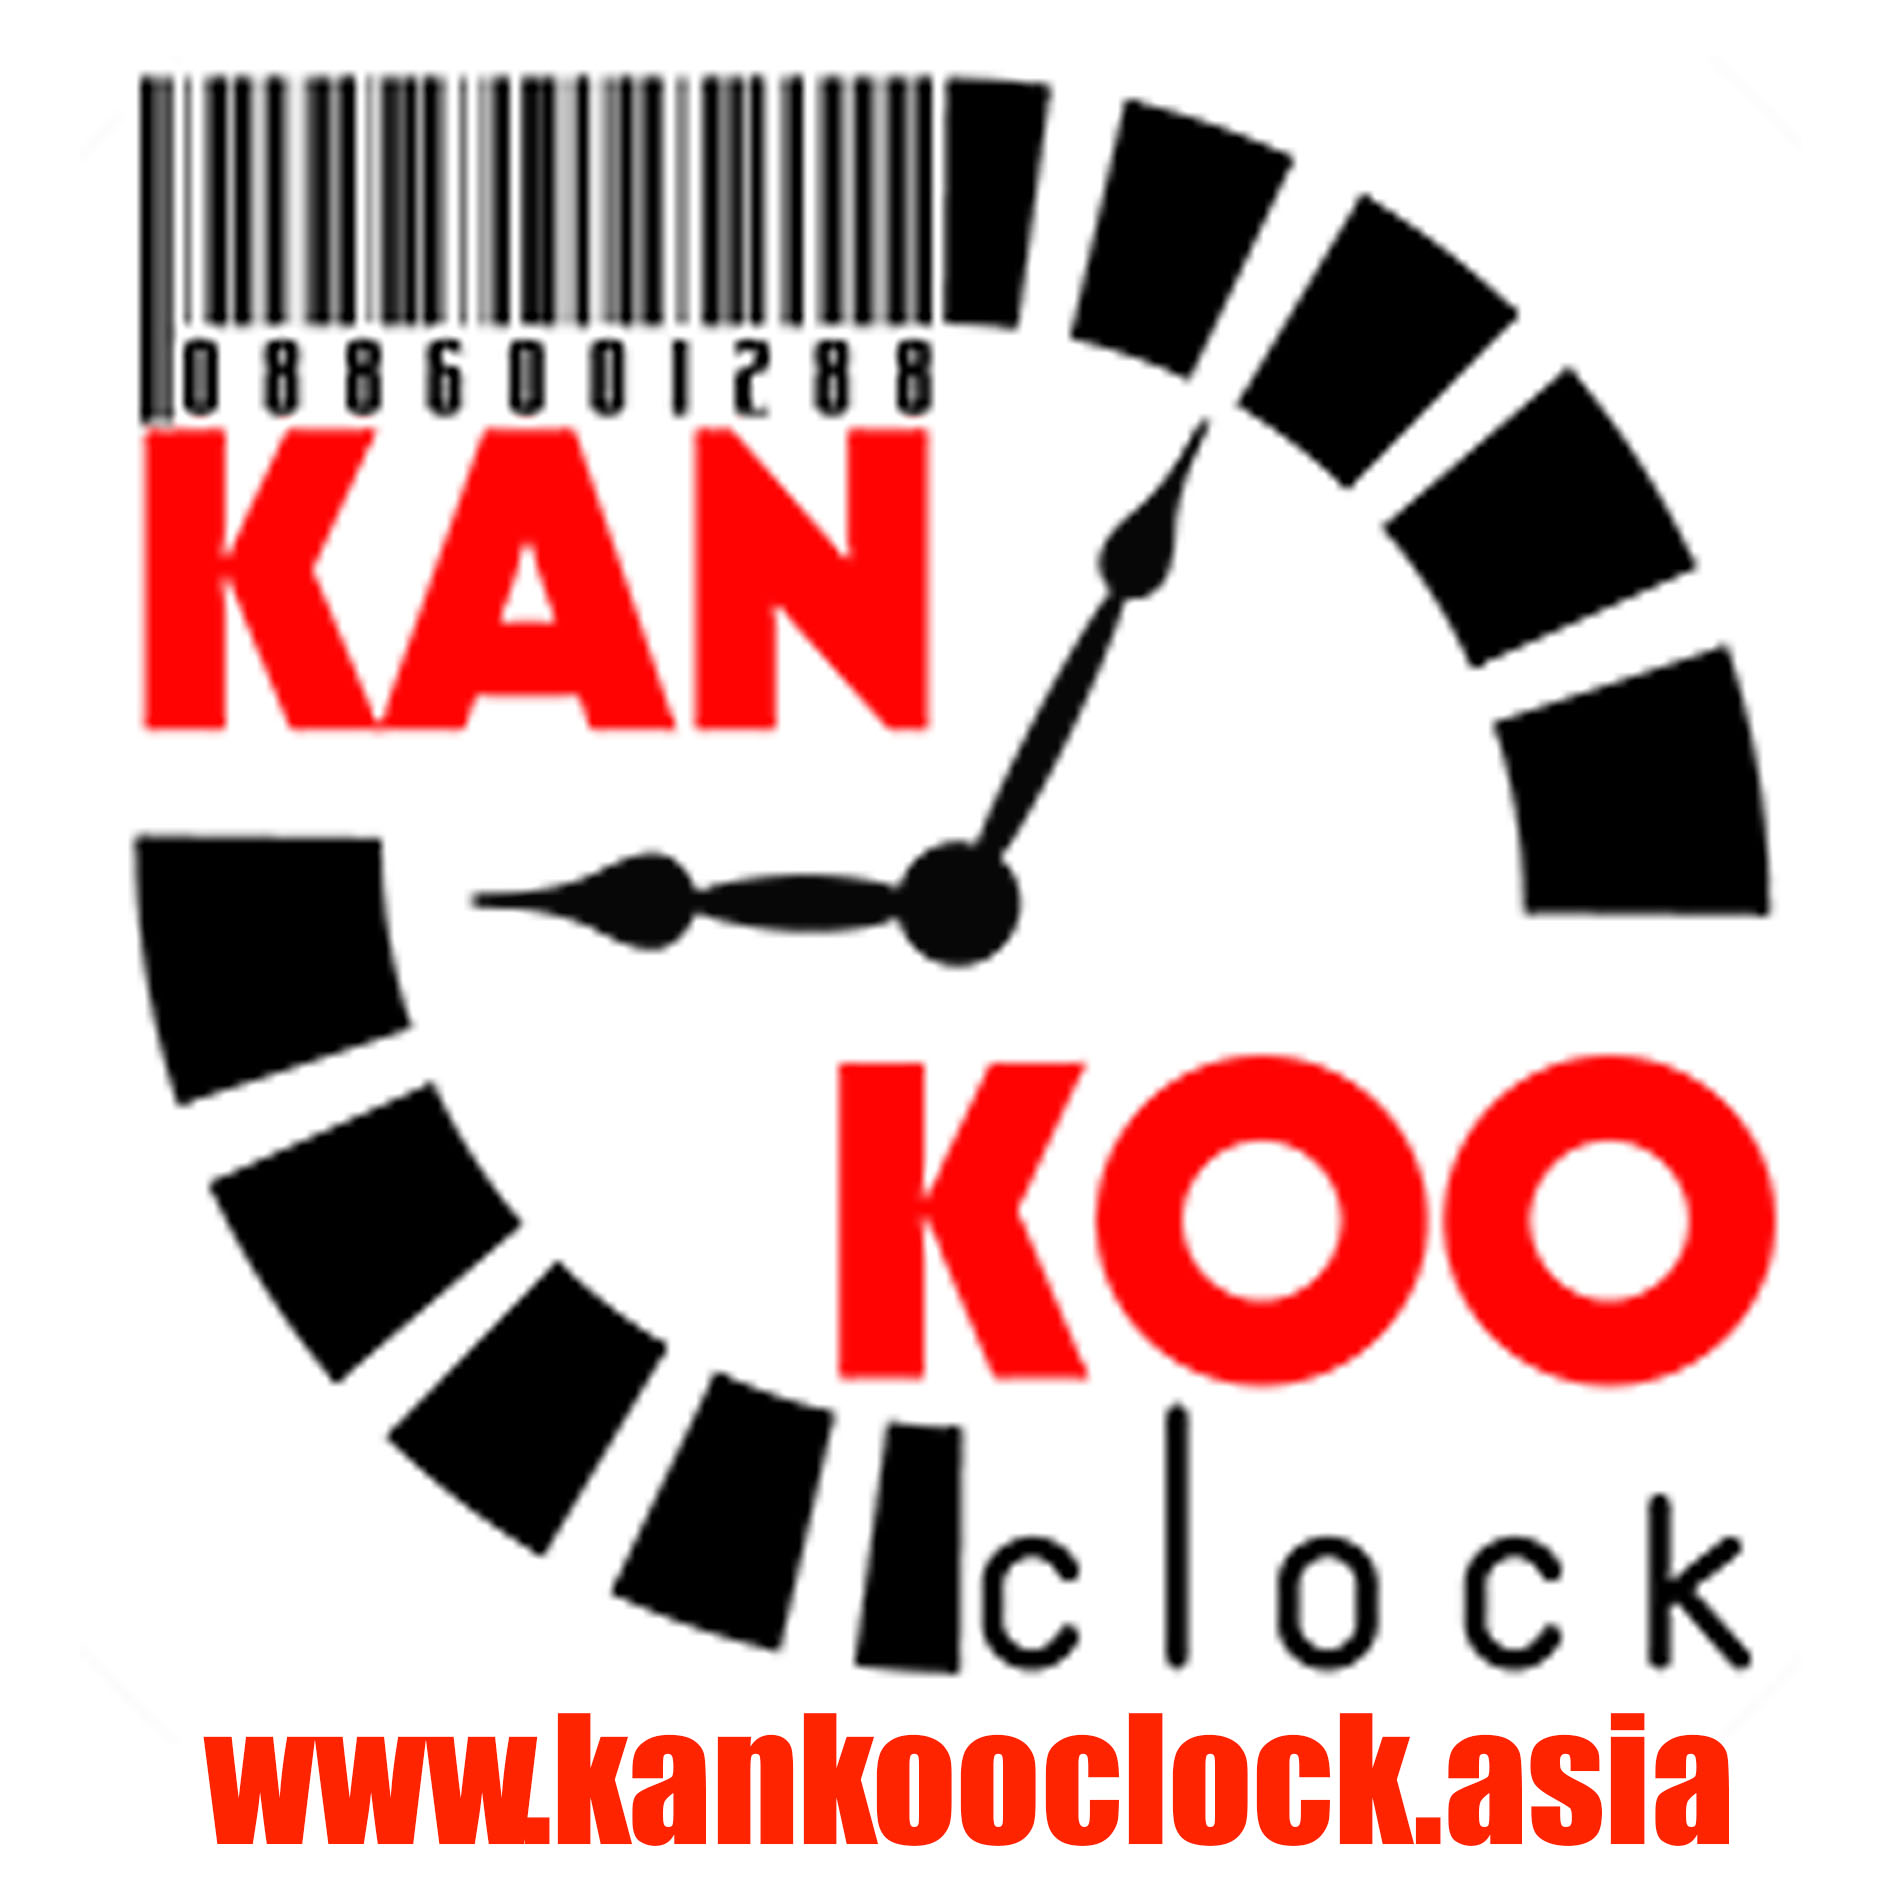 Kankoo clock